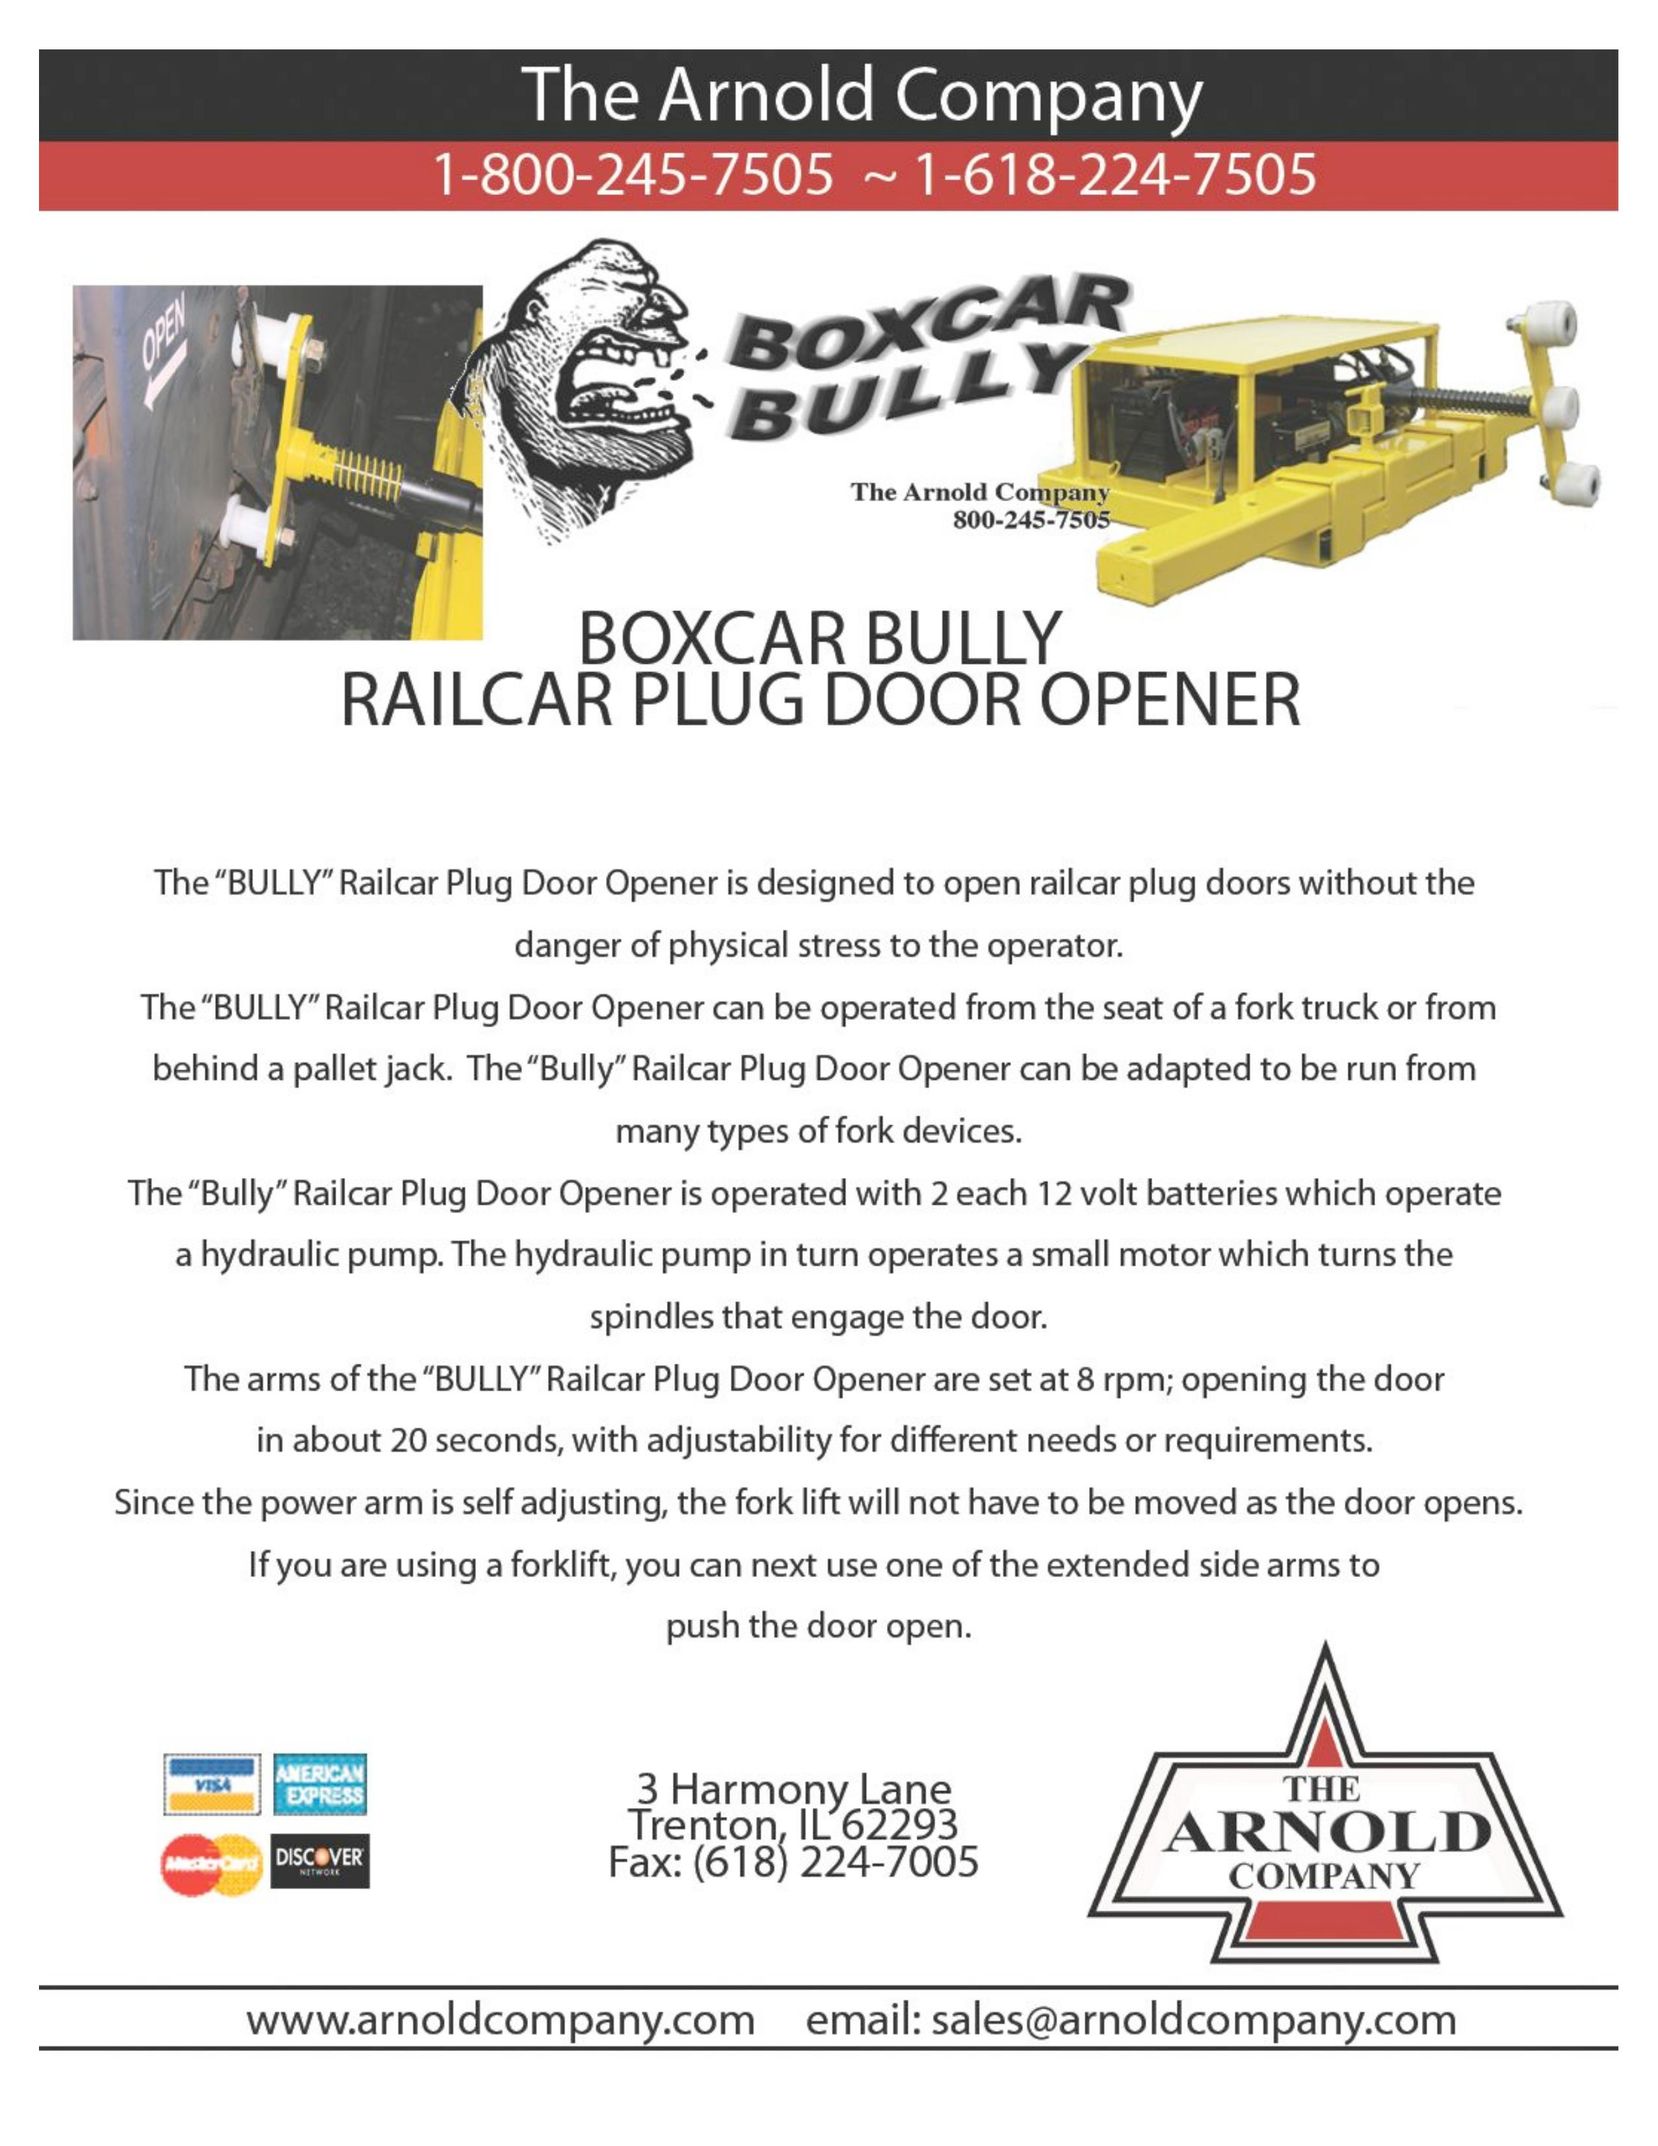 Arnold Company Boxcar Bully Railcar Plug Door Opener Garage Door Opener User Manual